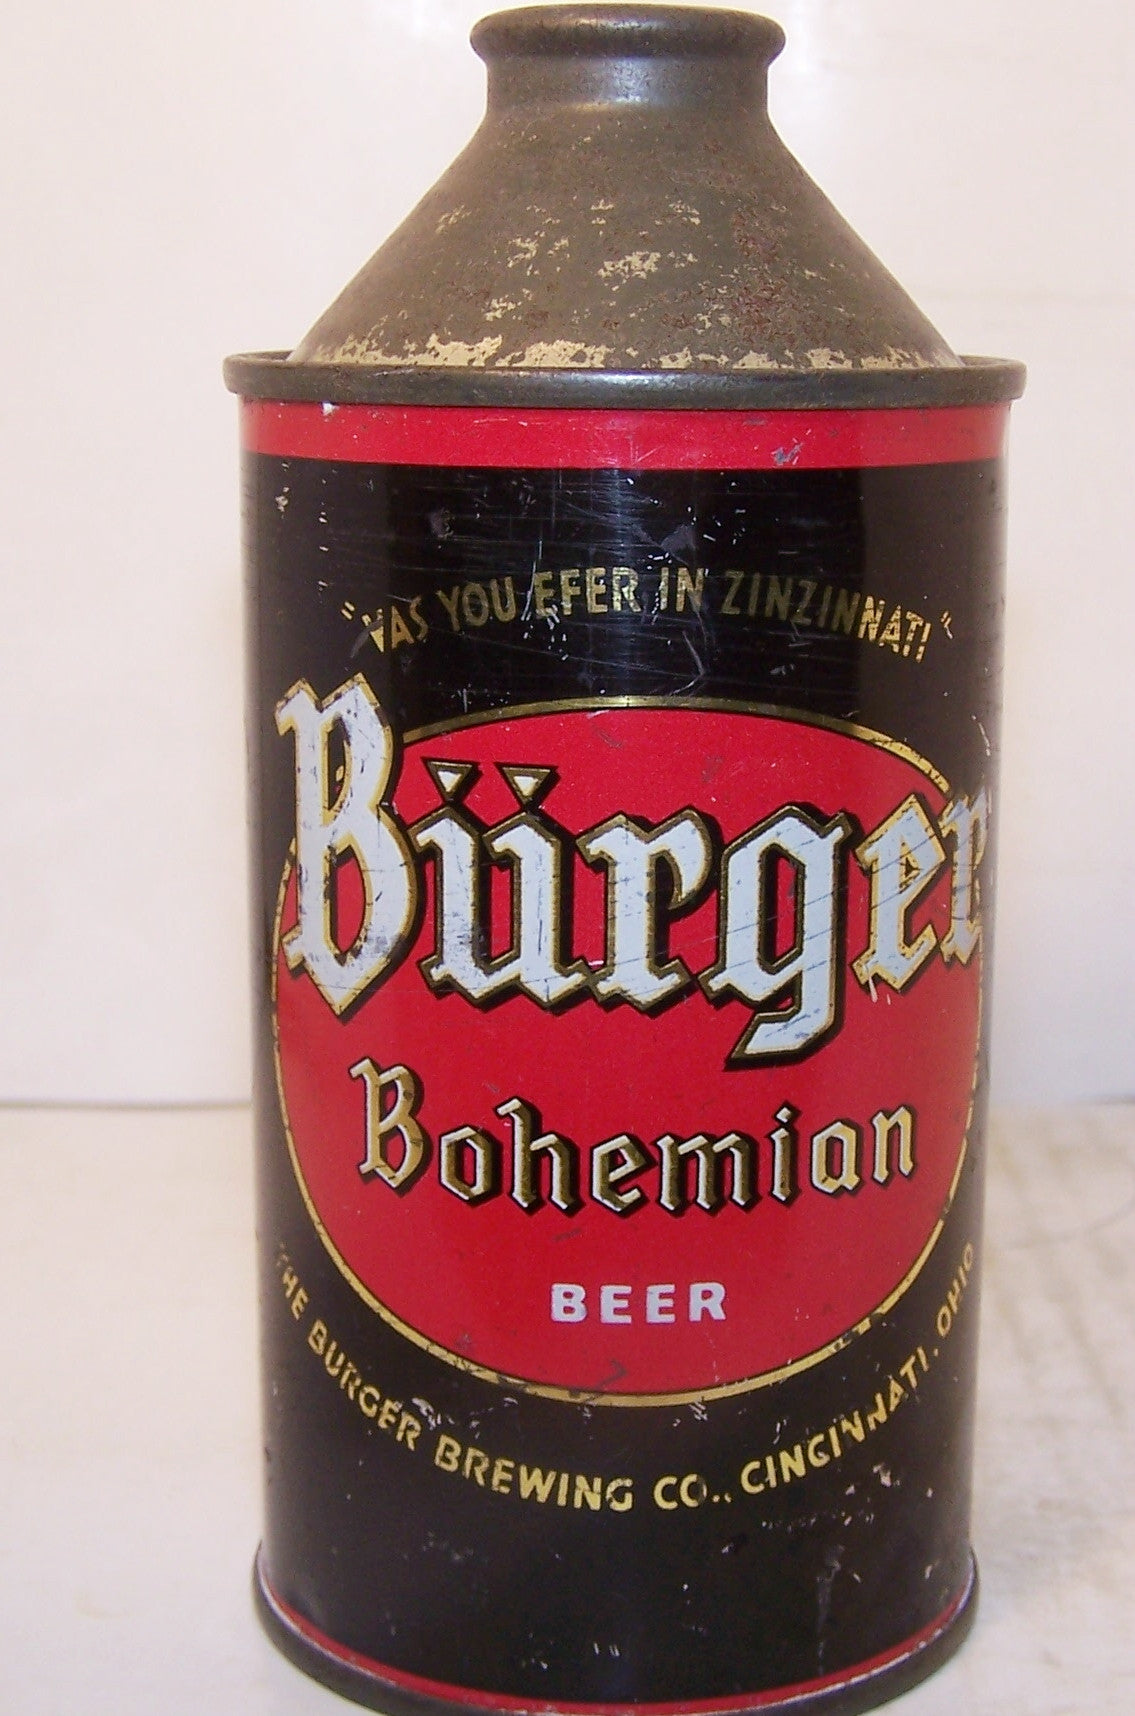 Burger Bohemian Beer, USBC 155-26, Grade 1- Sold 7/23/16